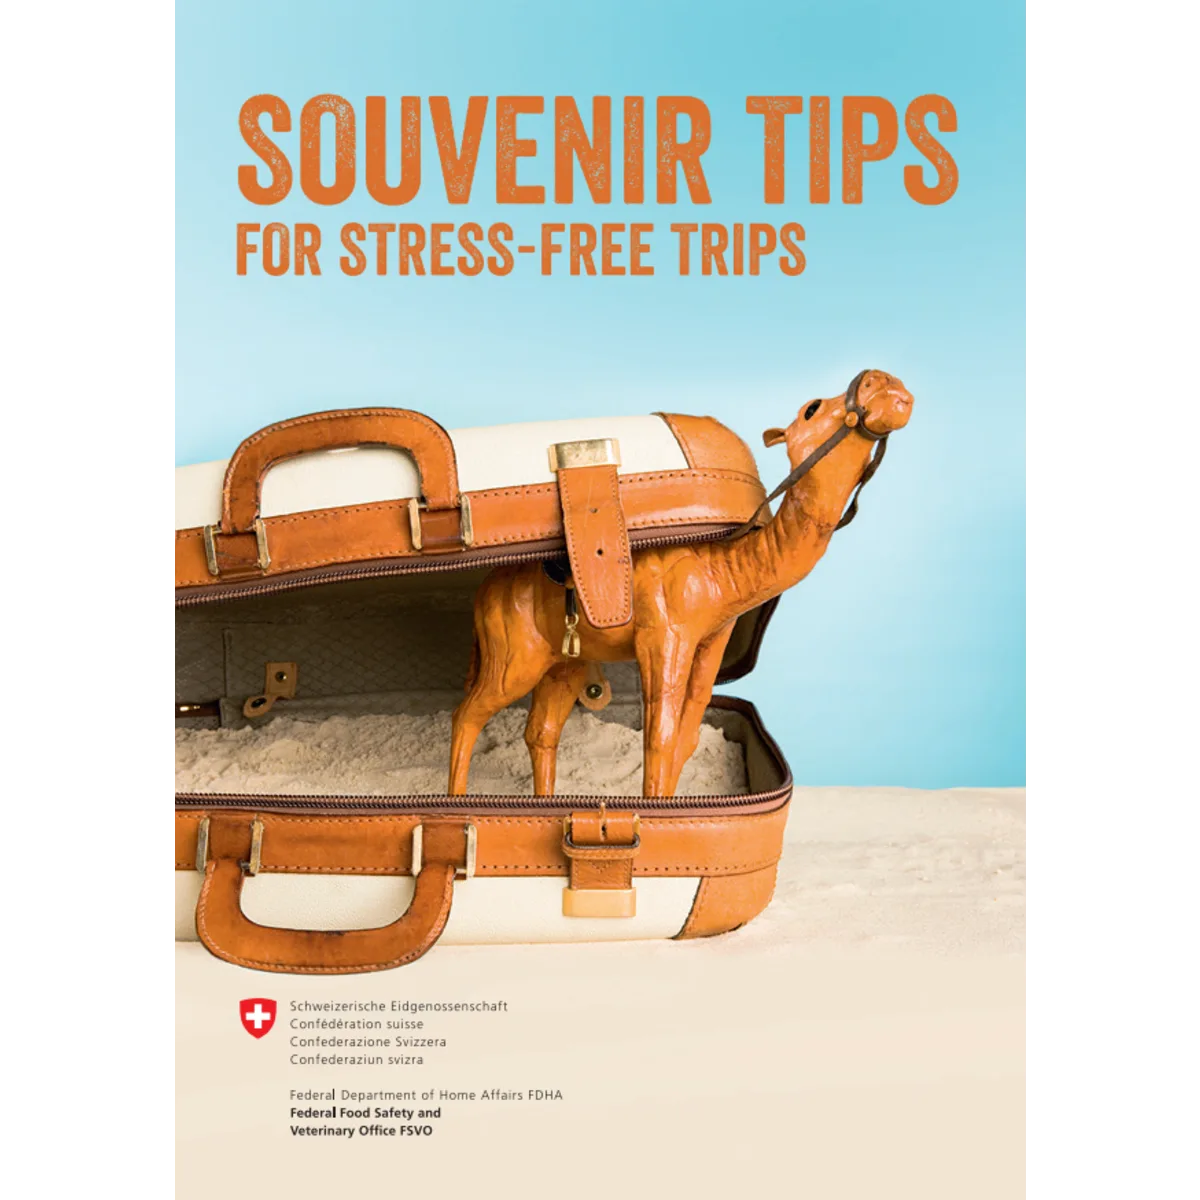 Souvenir Tips for stress-free trips